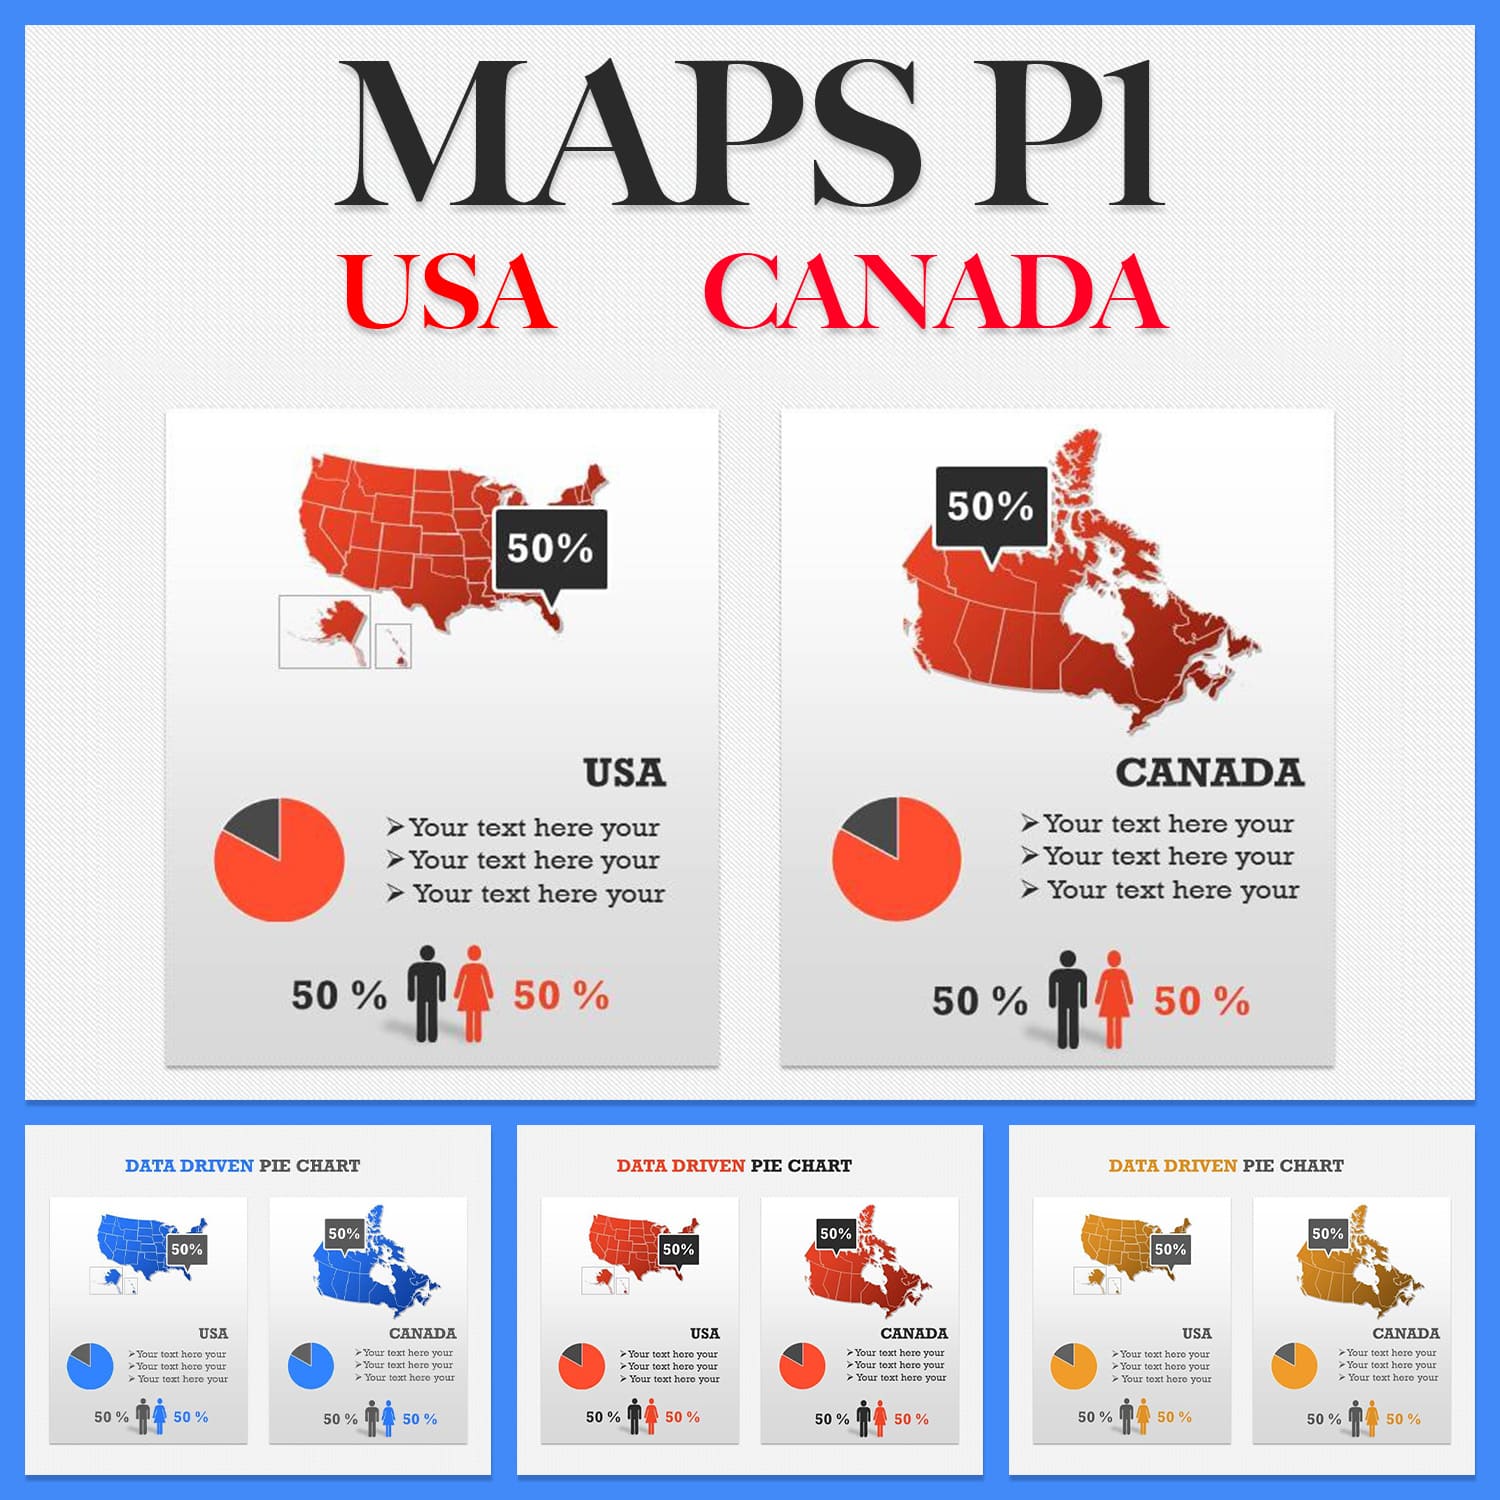 Maps P1 USA Canada.